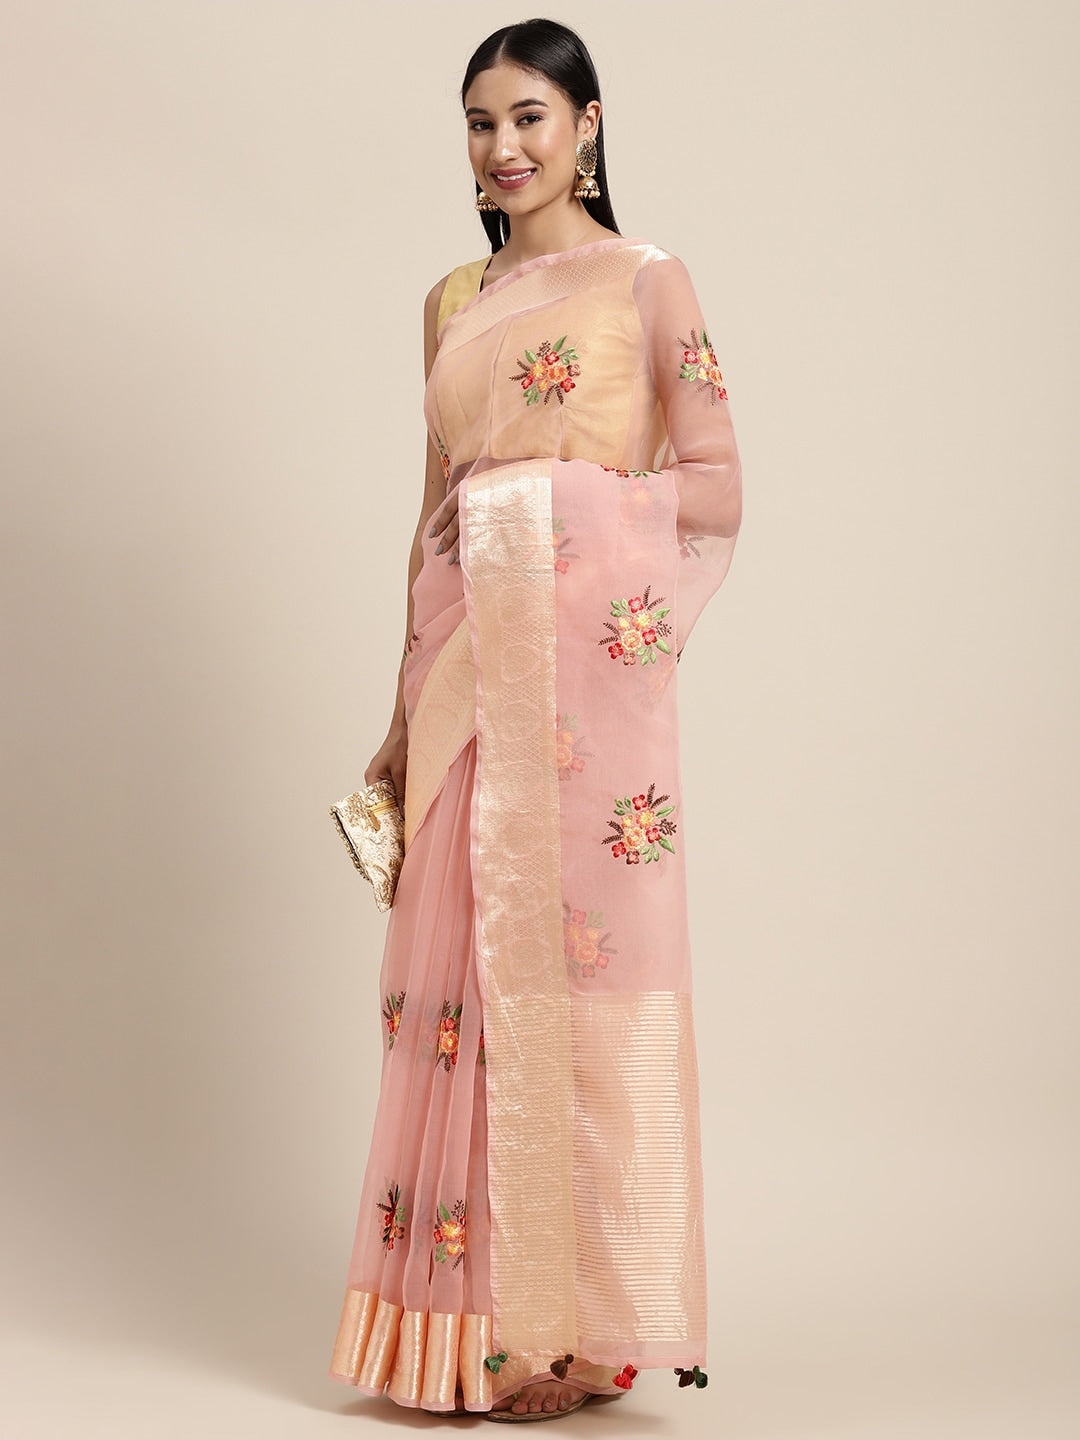 Neeru's pink color, organza fabric saree